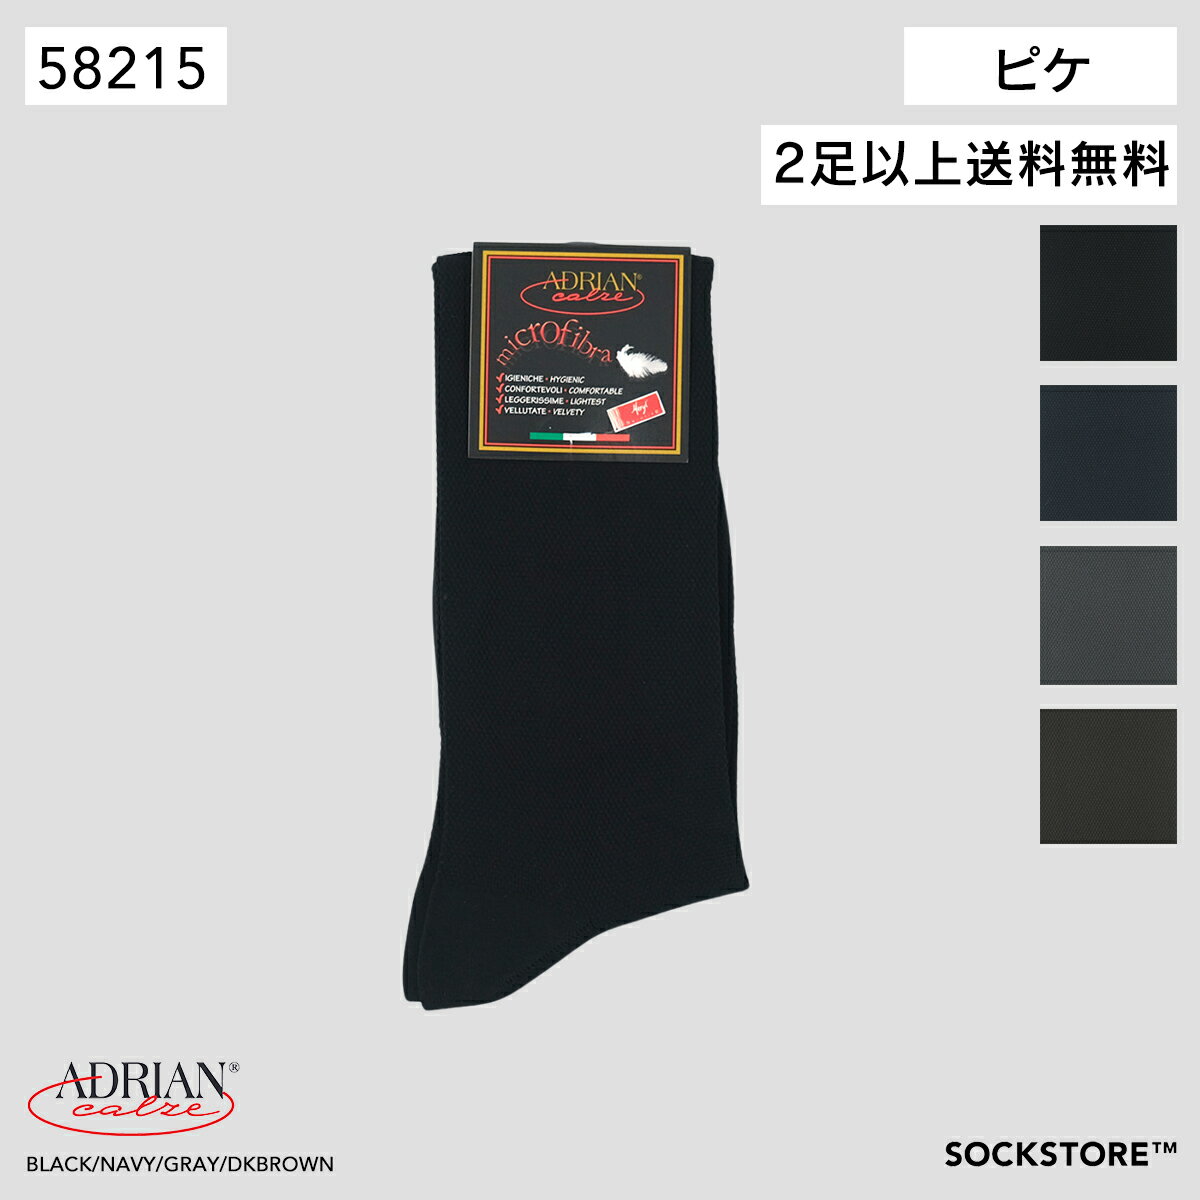 ADRIAN アドリアン ロングホーズ ピケ マイクロファイバー ソックス 靴下 BLACK/NAVY/GRAY/BROWN イタリア製 58215